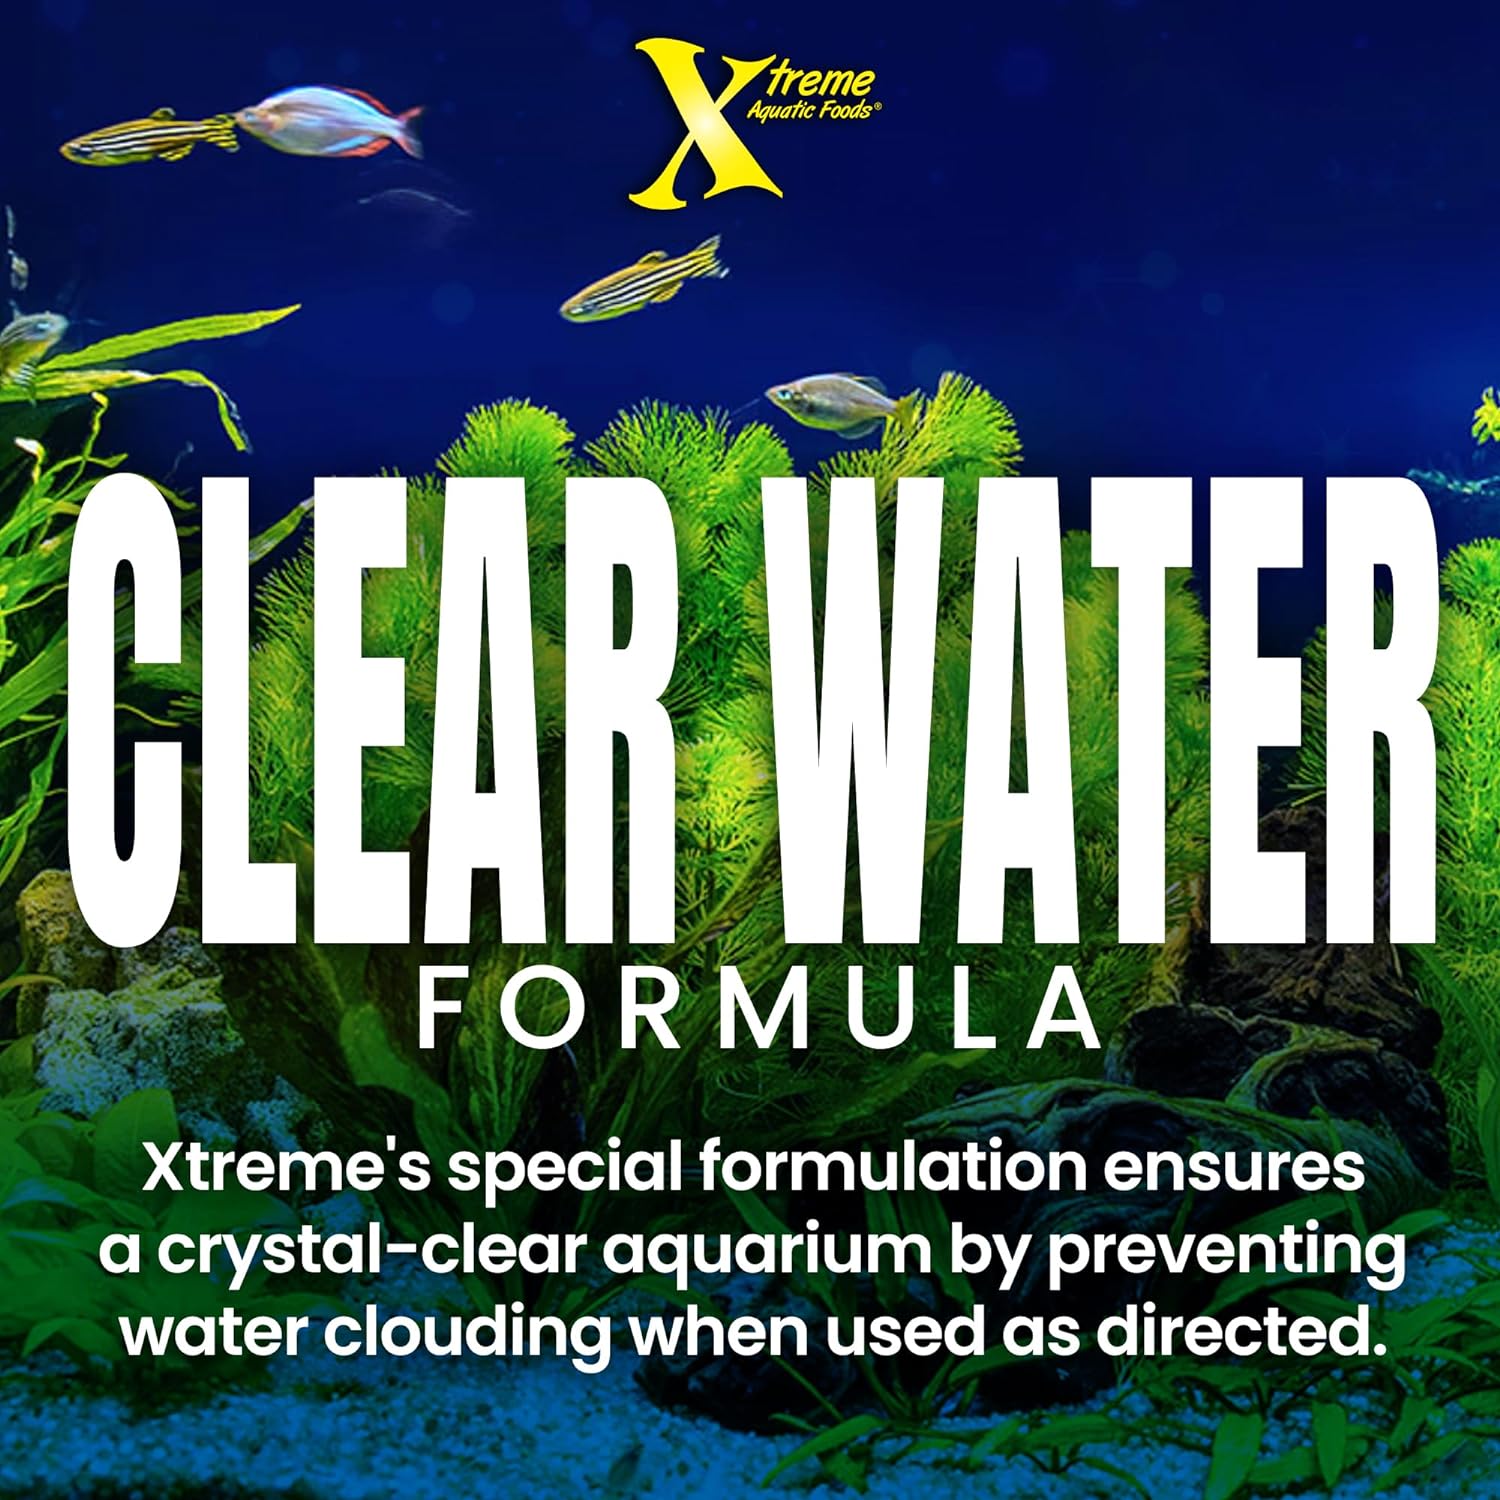 Xtreme Aquatic Foods Community PeeWee 1.5mm Slow-Sinking Pellets Super Cichlids